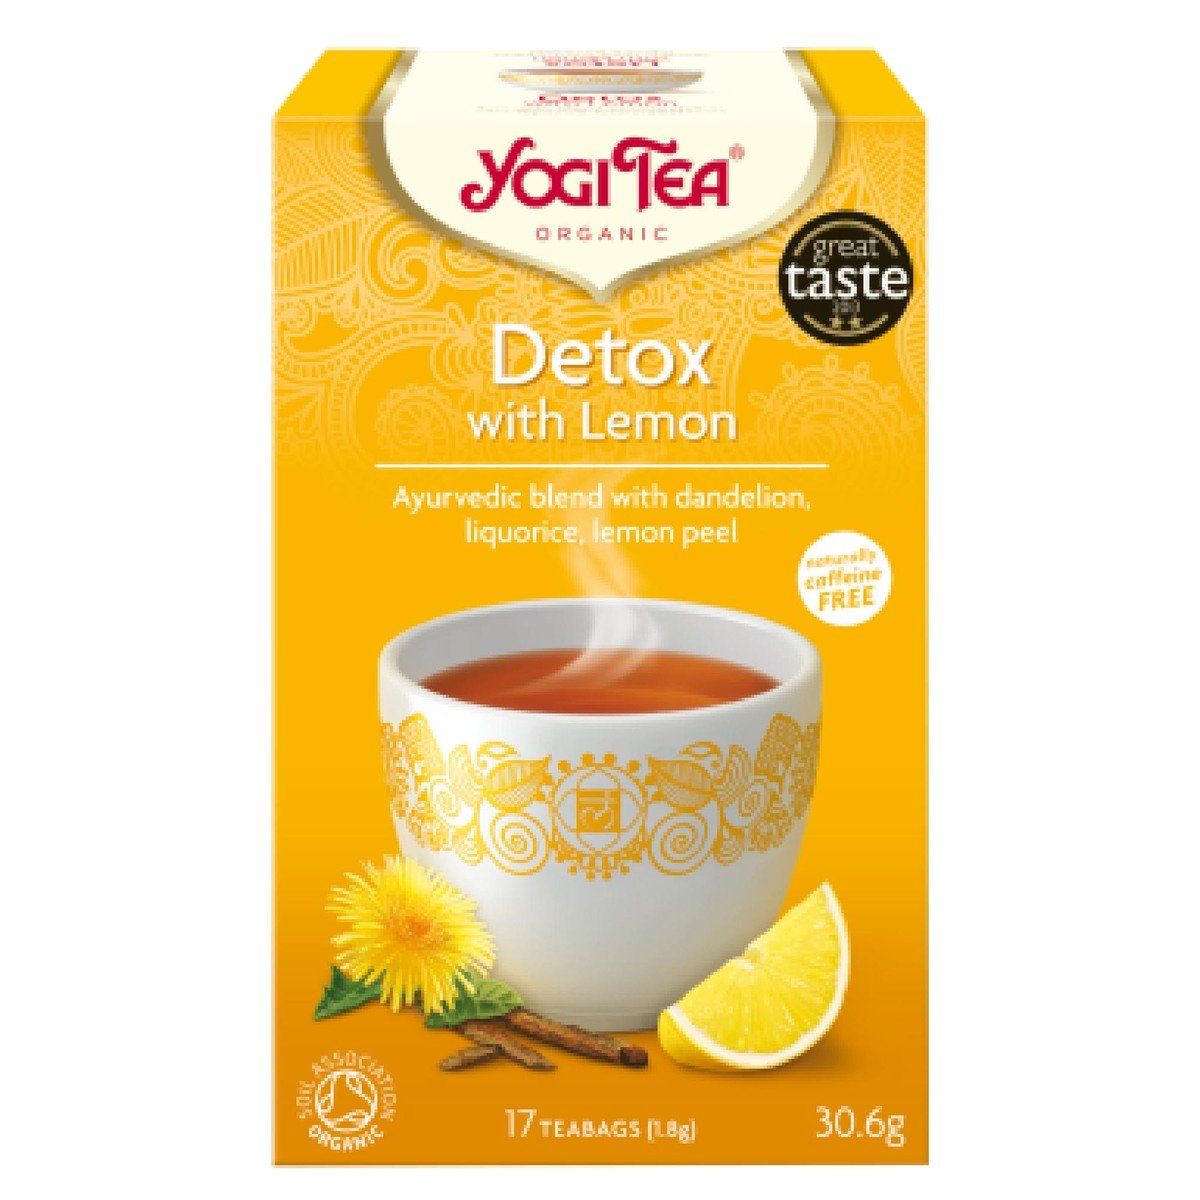 Yogi Tea Organic Detox With Lemon Tea 30.6g